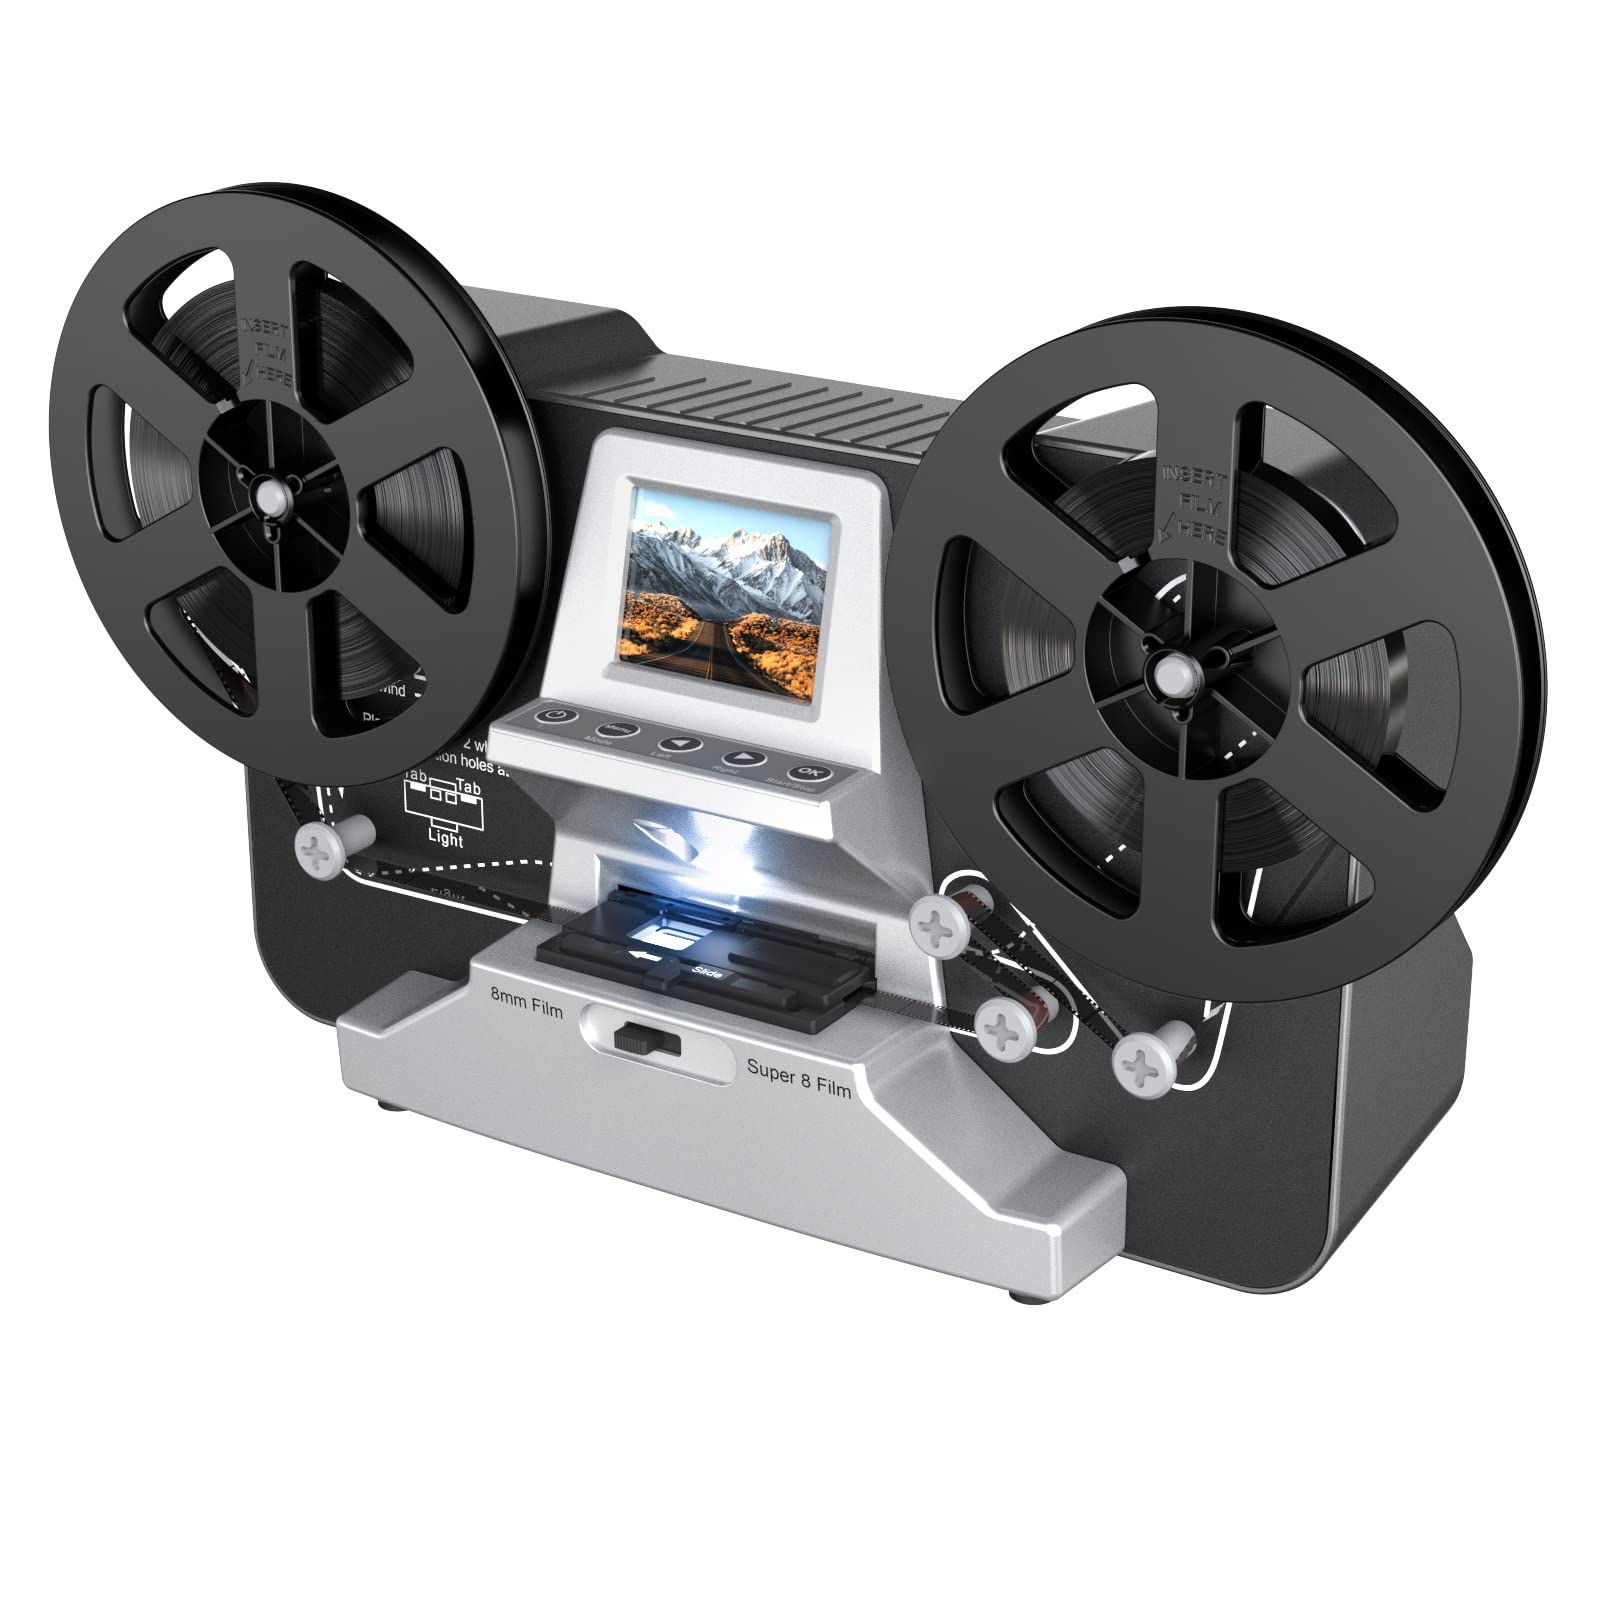 8mm & Super 8 Reels to Digital Film Scanner Converter, Film Digitizer with 2.4 Screen, Convert 3